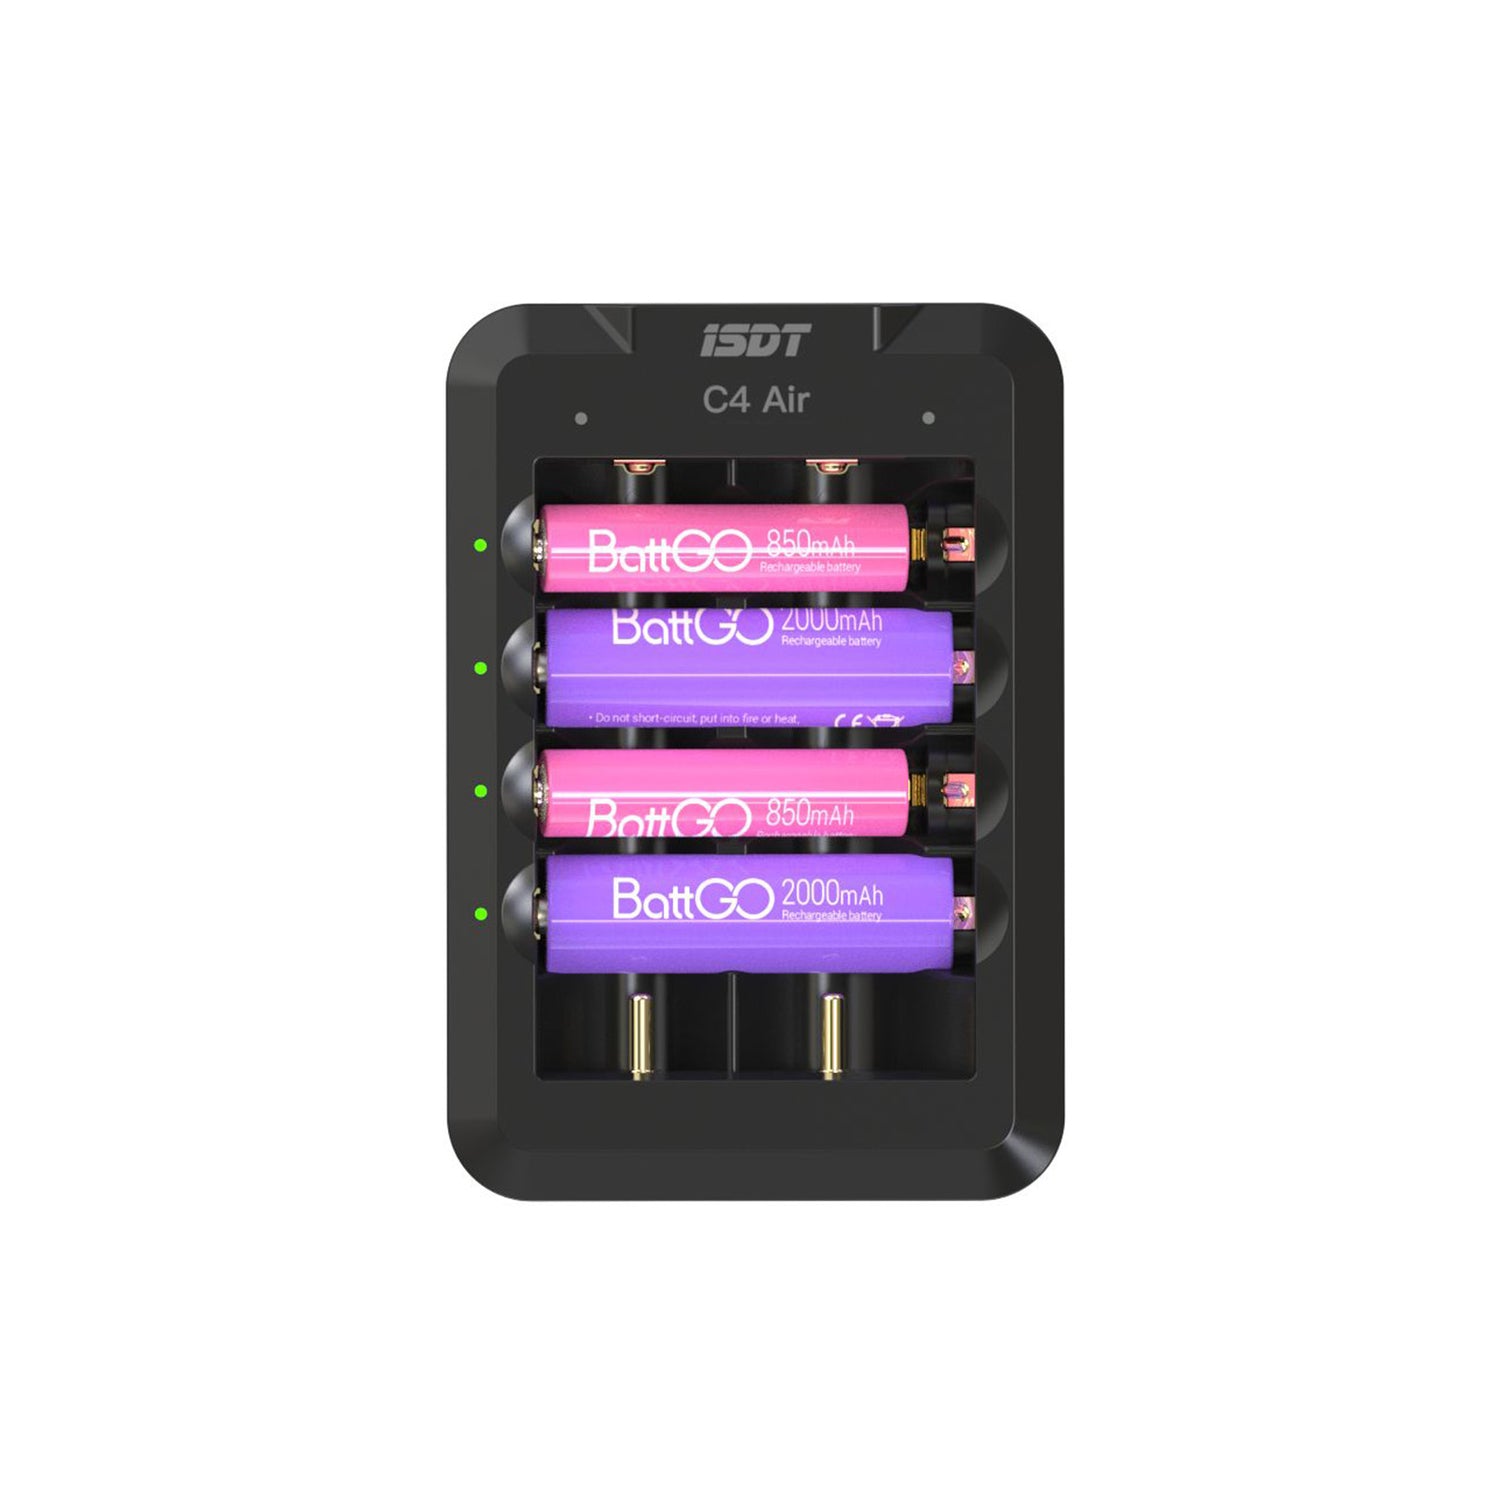 C4 Air Quick Battery Charger, 6 Slot USB C Rumah Tangga Baterai dengan Fungsi Koneksi Aplikasi Bluetooth